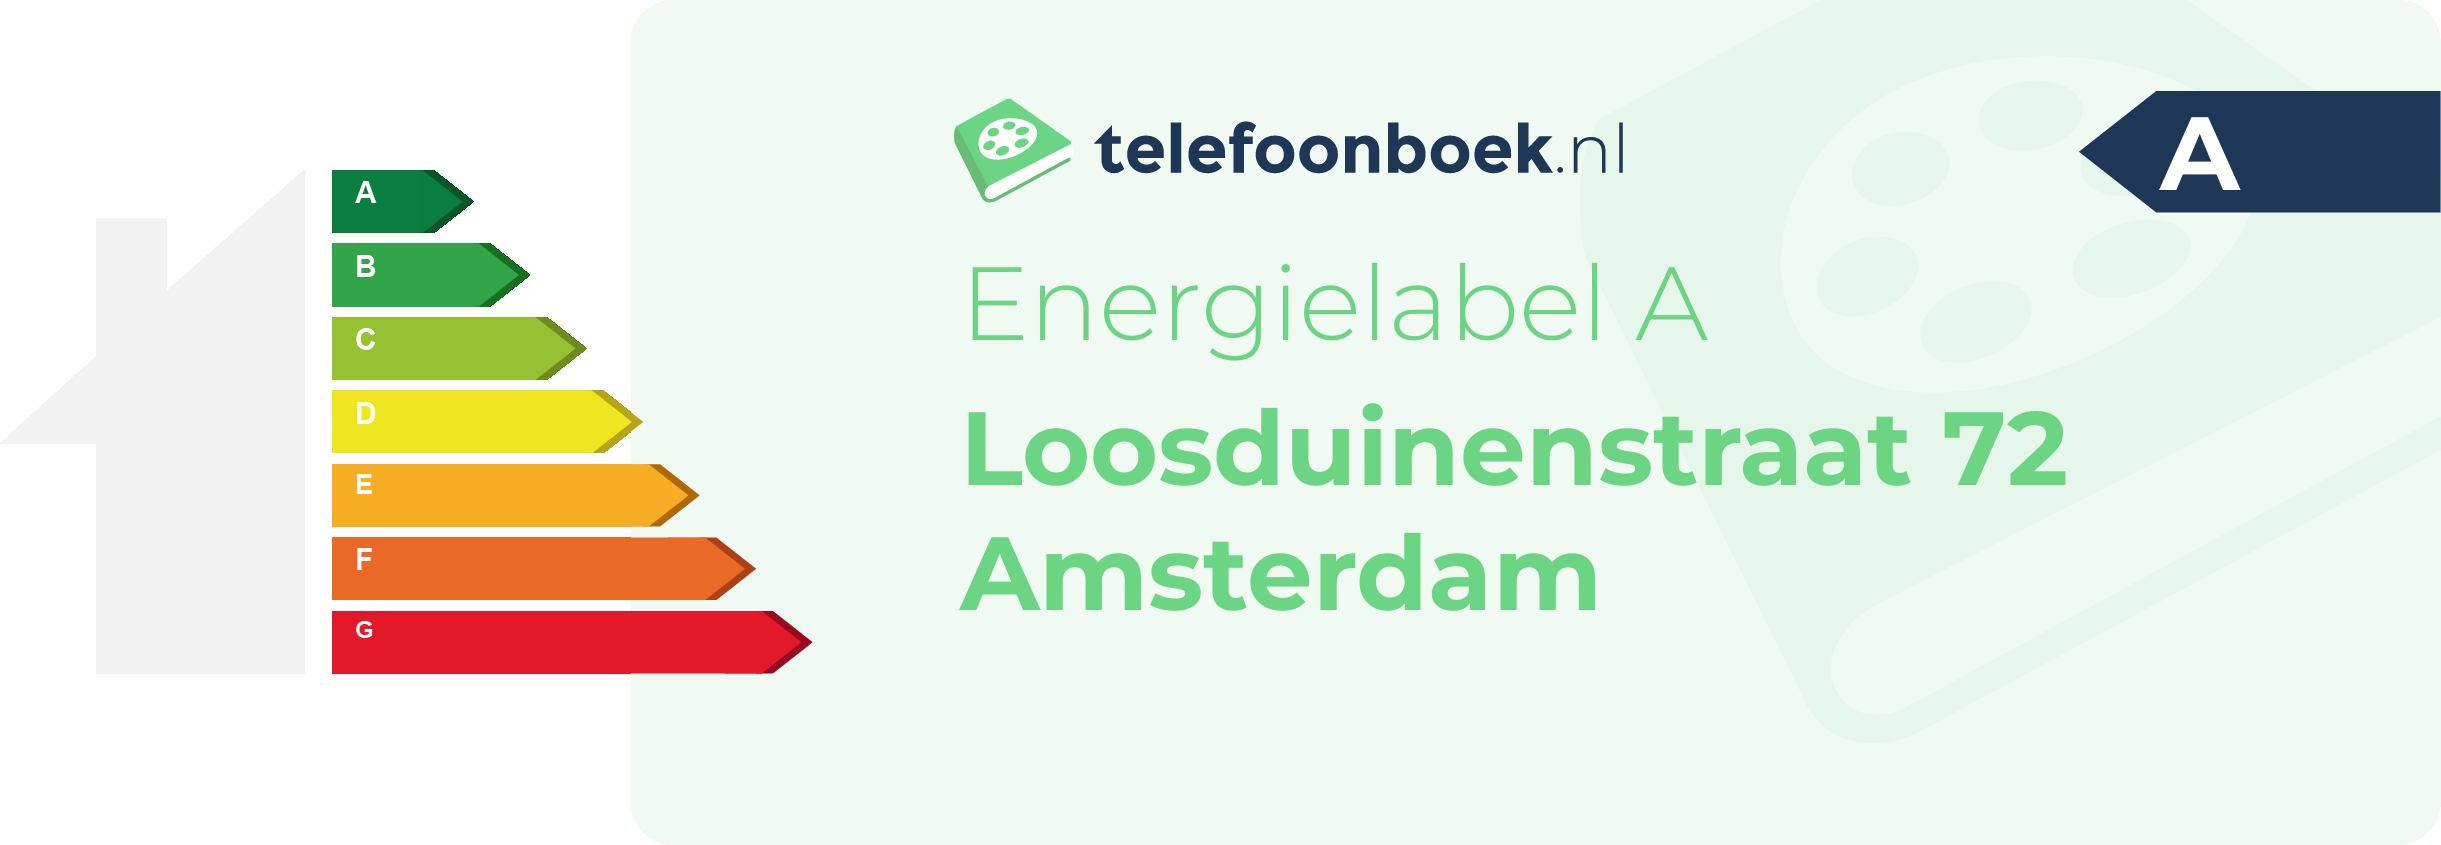 Energielabel Loosduinenstraat 72 Amsterdam